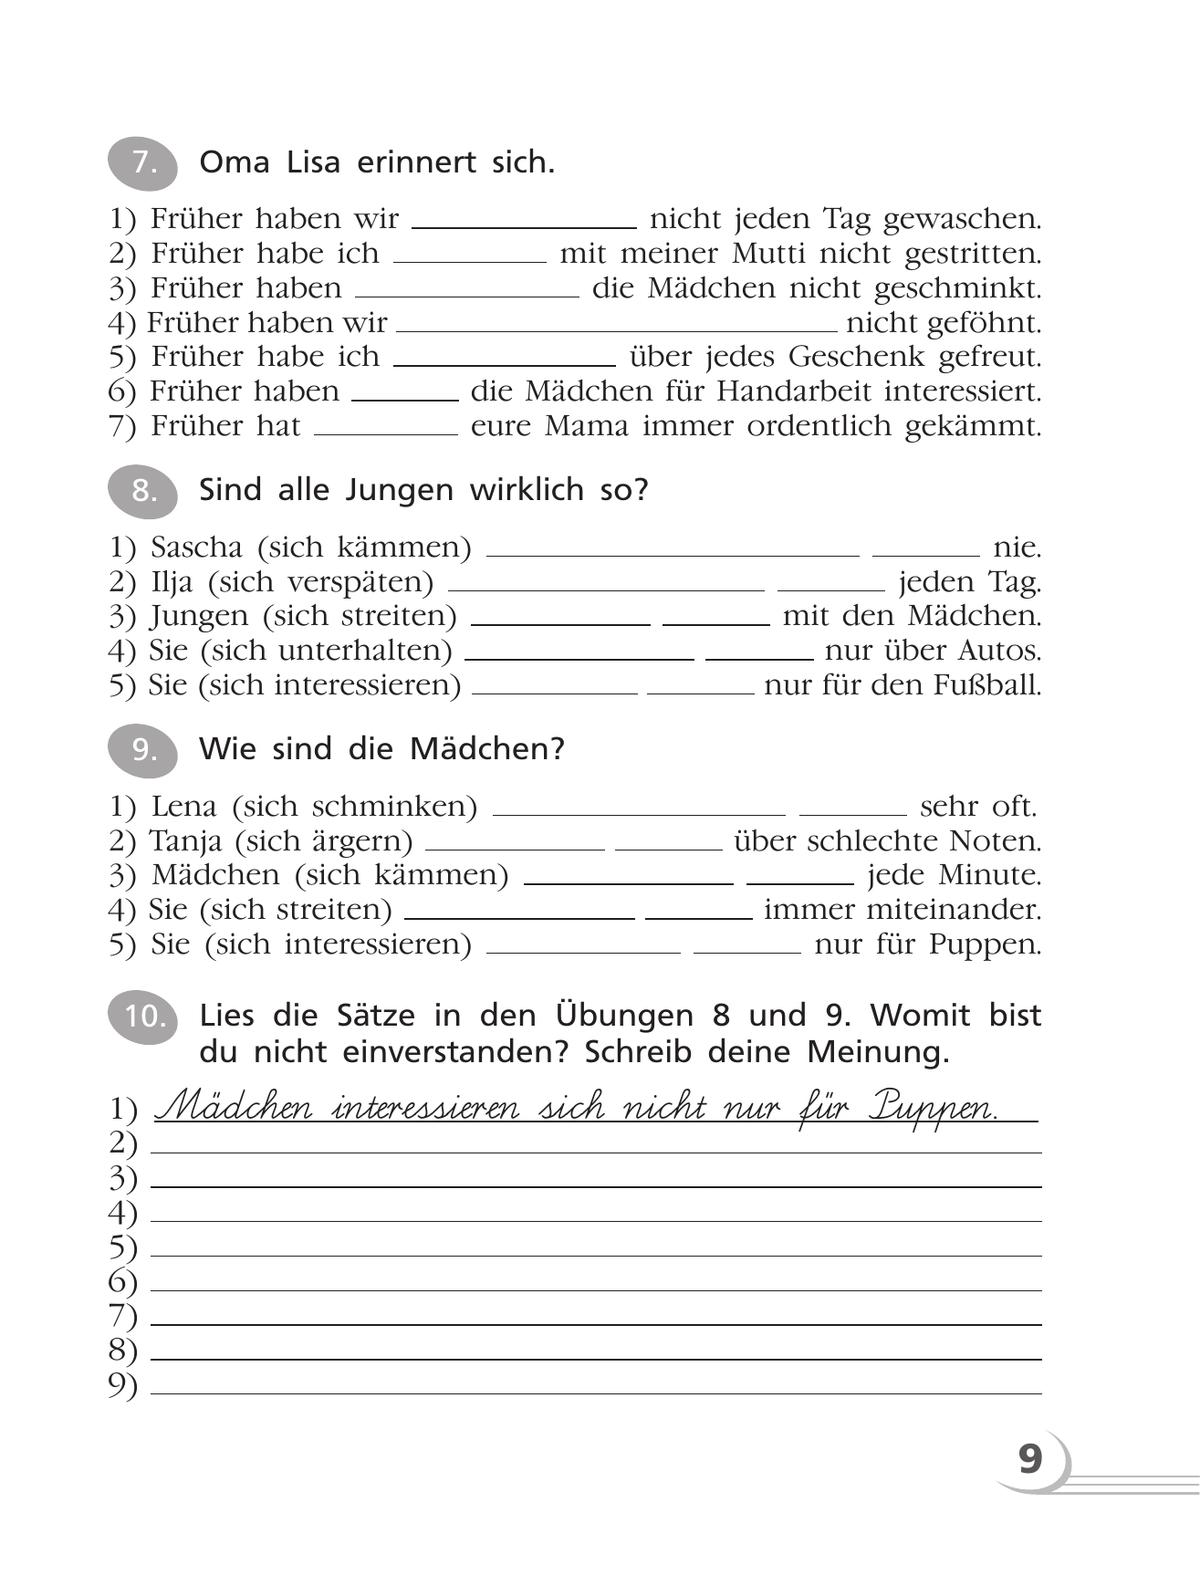 Немецкий язык. Грамматический тренажер. 5-6 классы 10